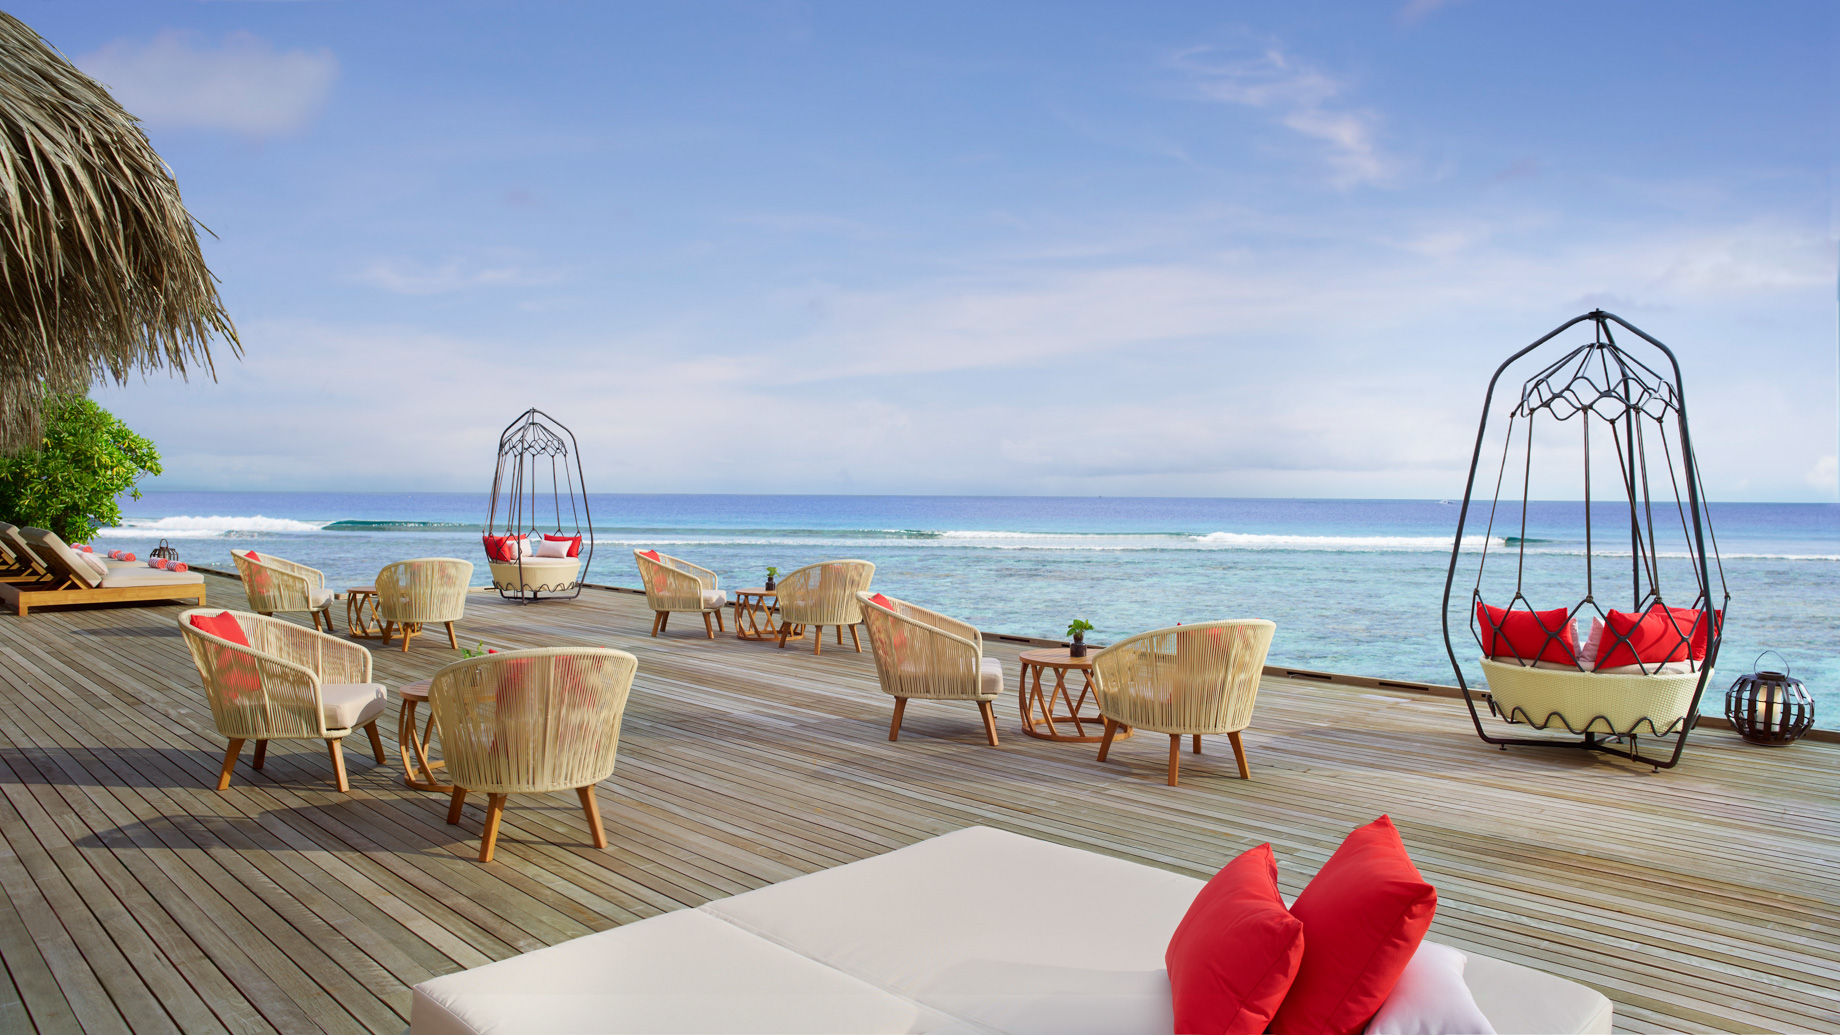 Anantara Veli Maldives Resort – South Male Atoll, Maldives – Dhoni Bar Deck